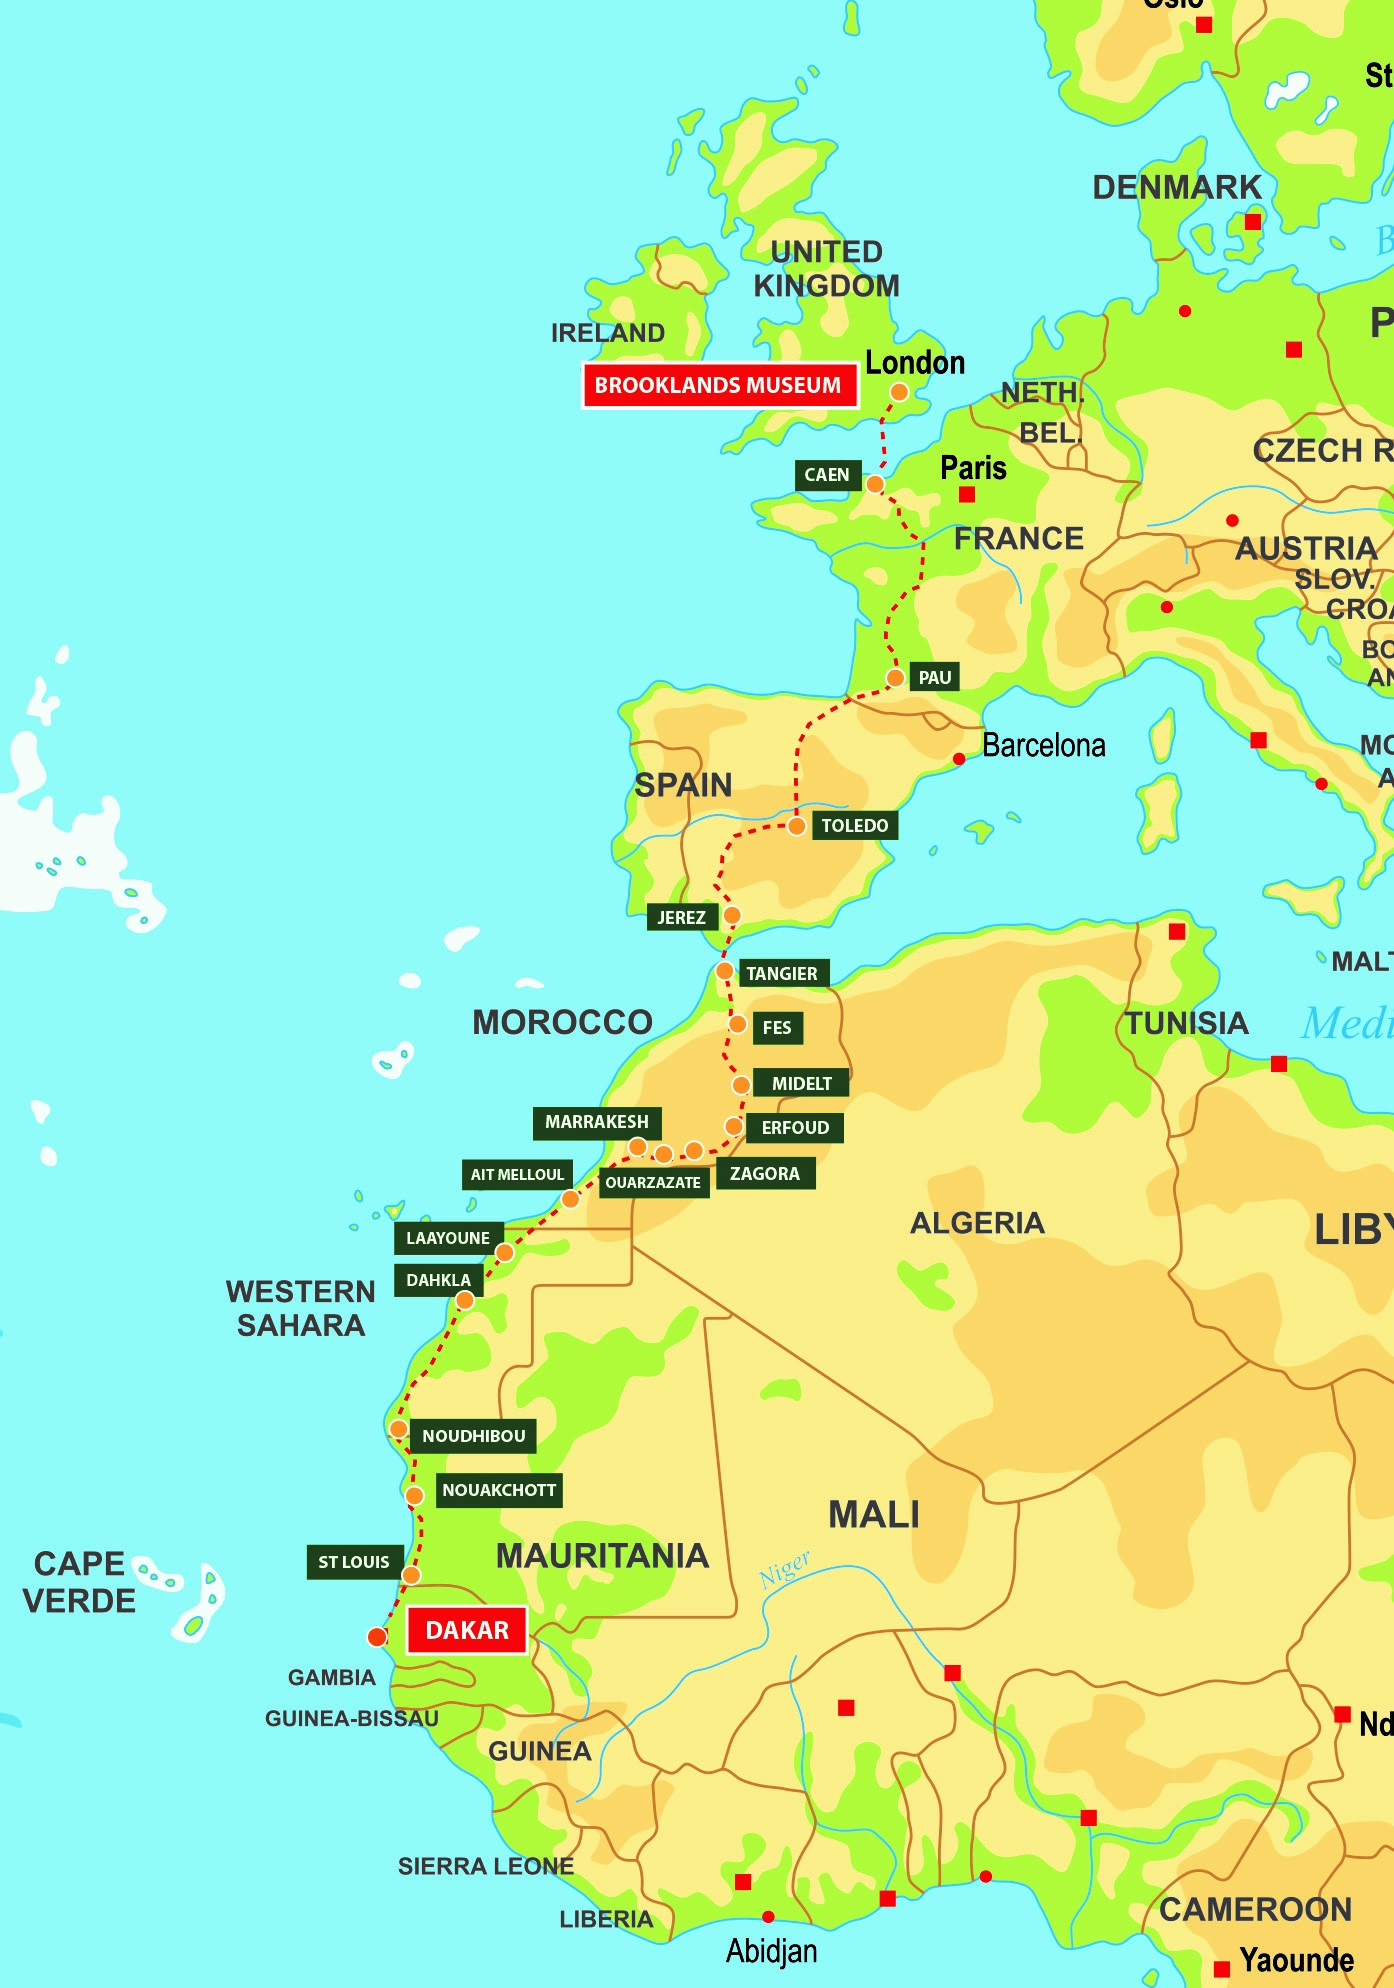 London - Dakar route